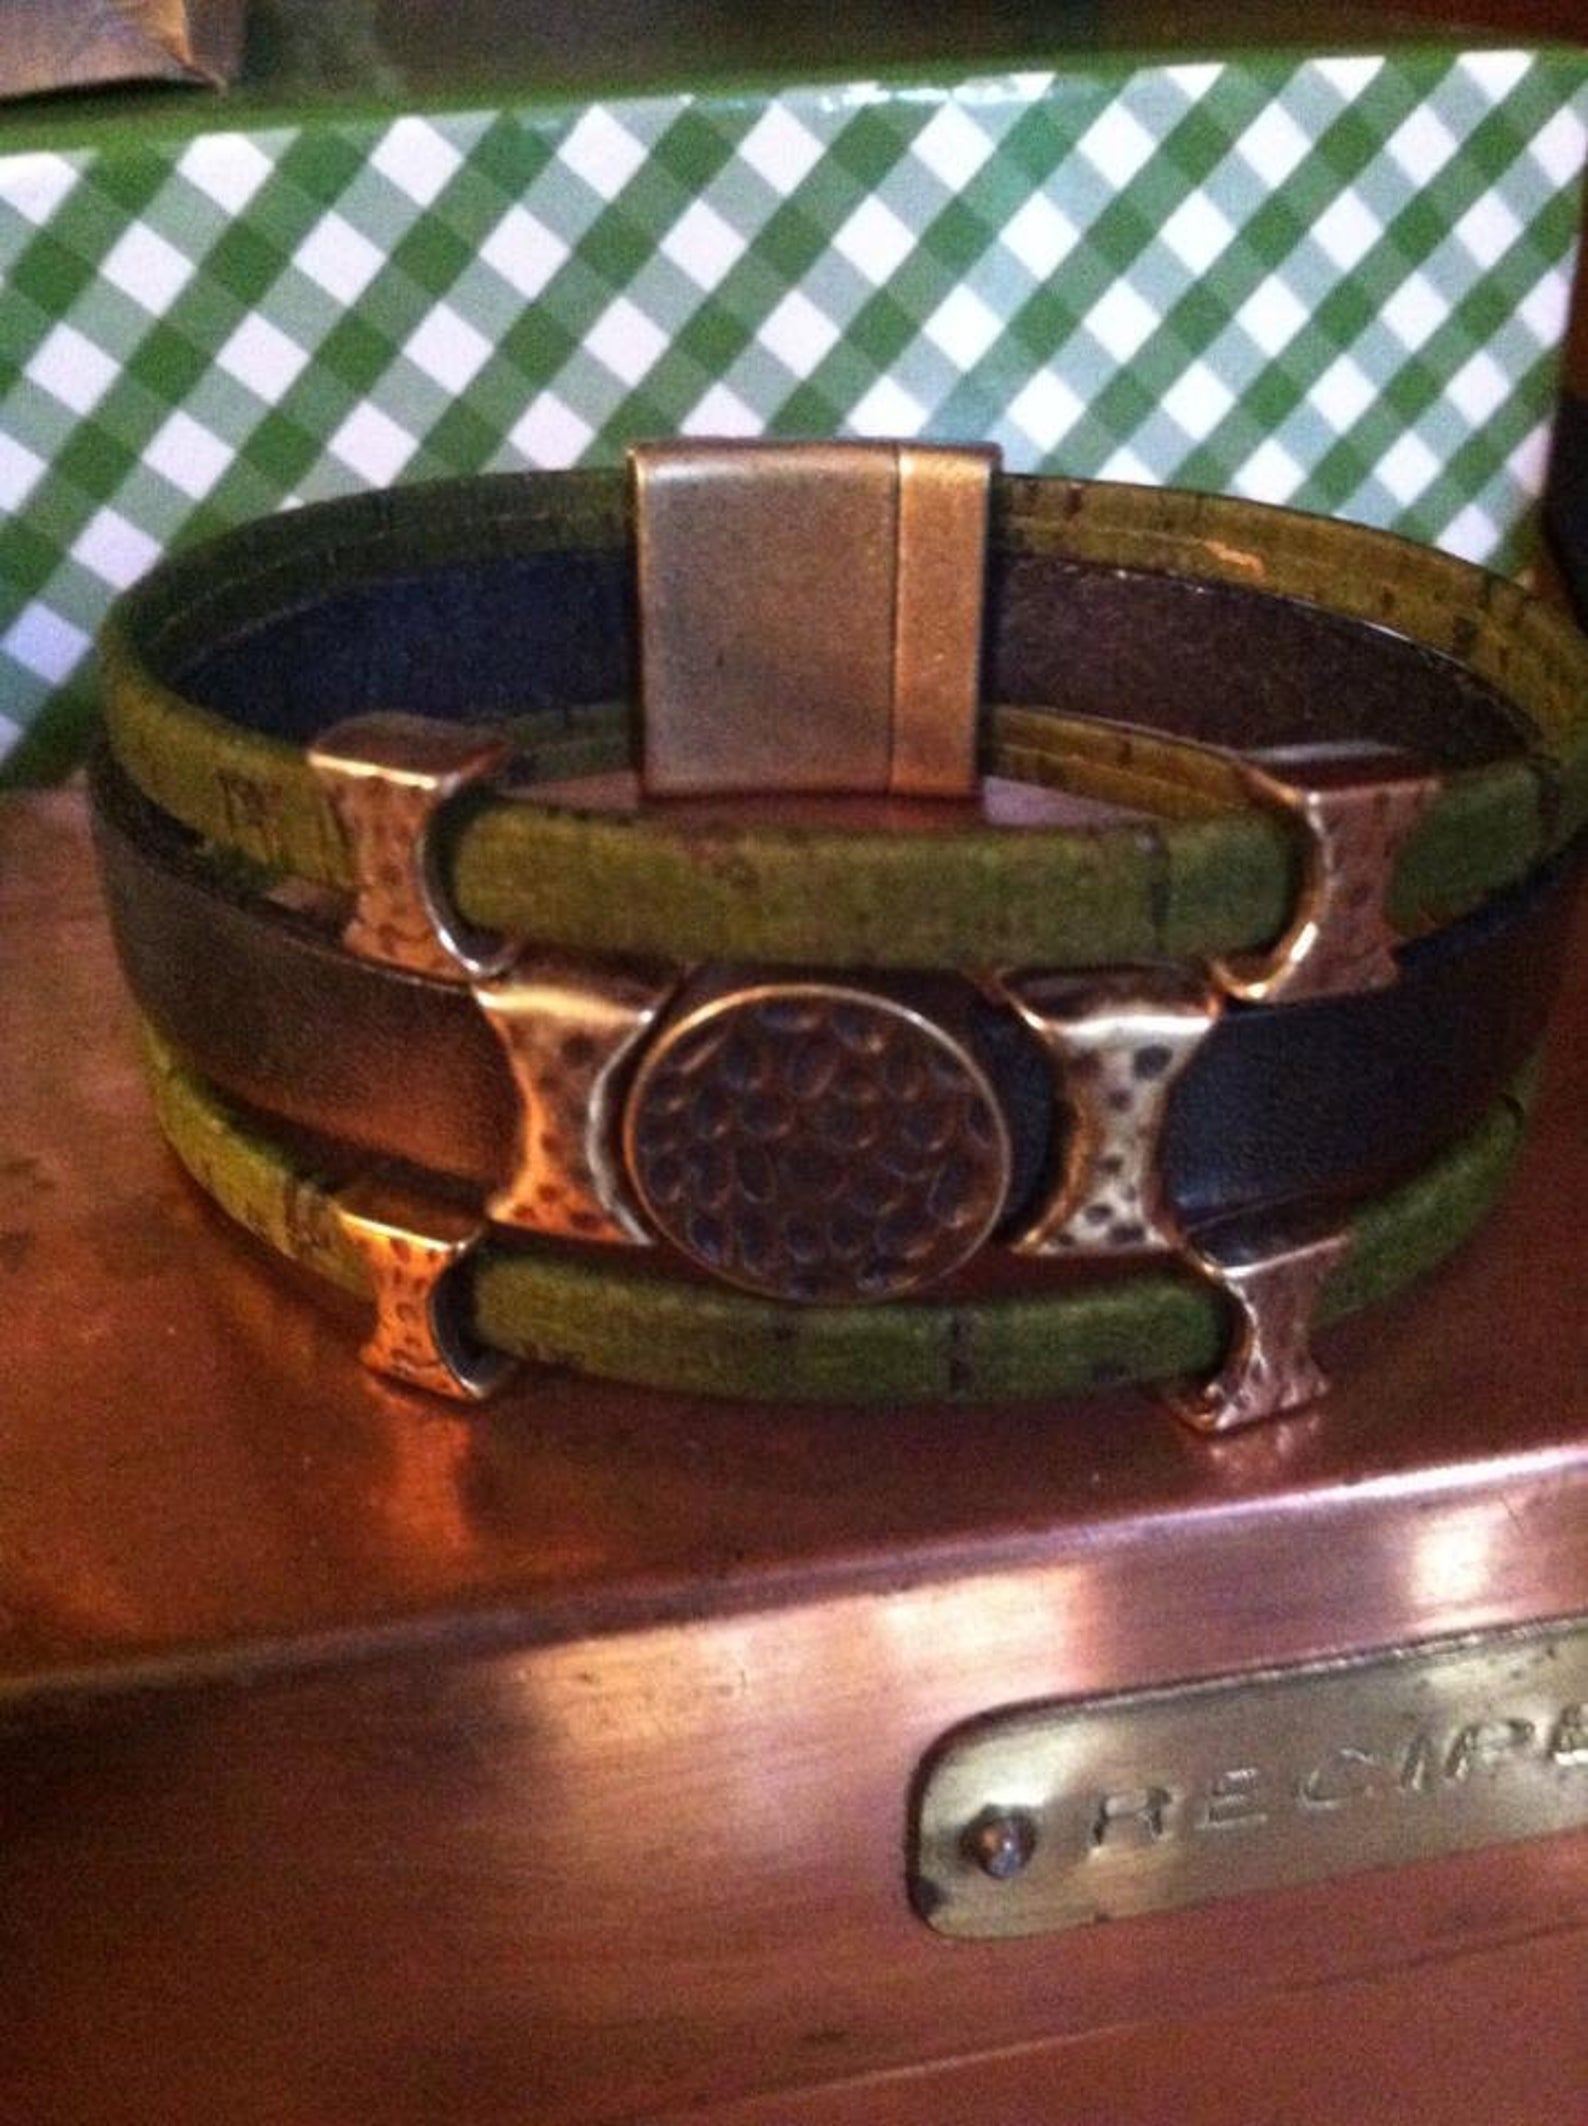 Olive this Bracelet!